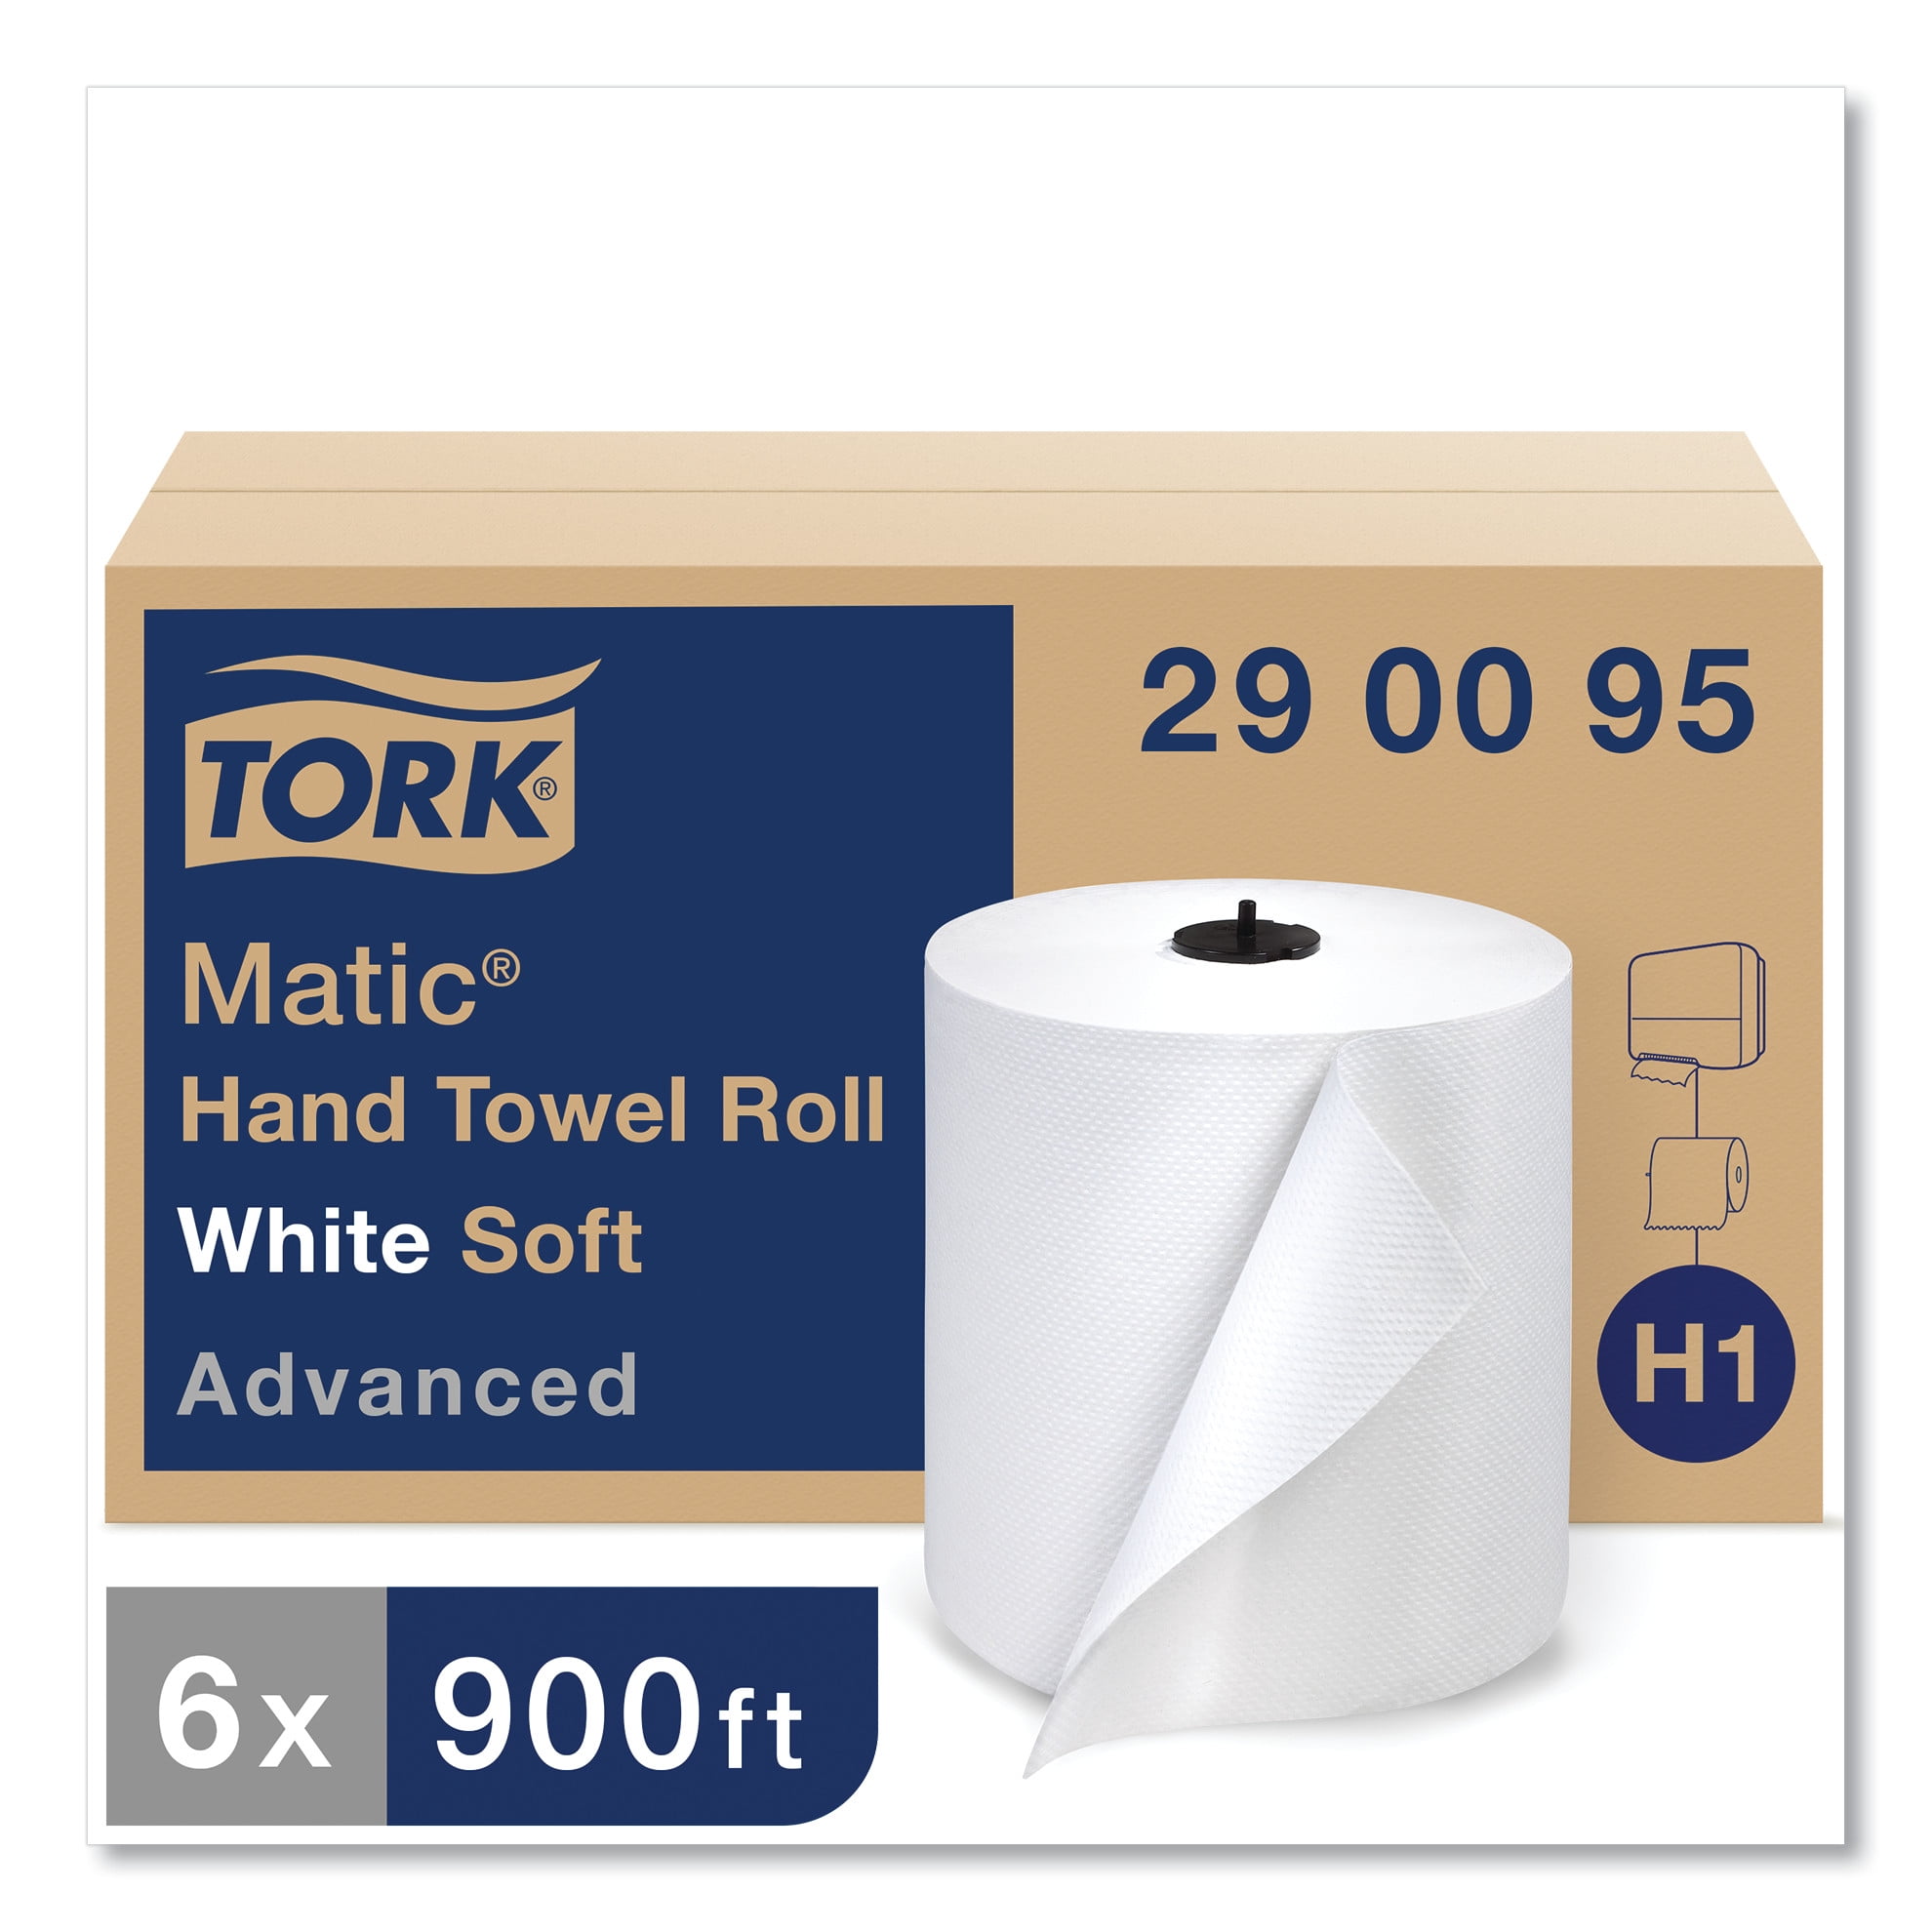 Roll 1 6. Tork matic h1. Торк матик hand Towel Roll диспенсер. Полотенца бумажные рулонные. Бумага полотенце в рулонах.